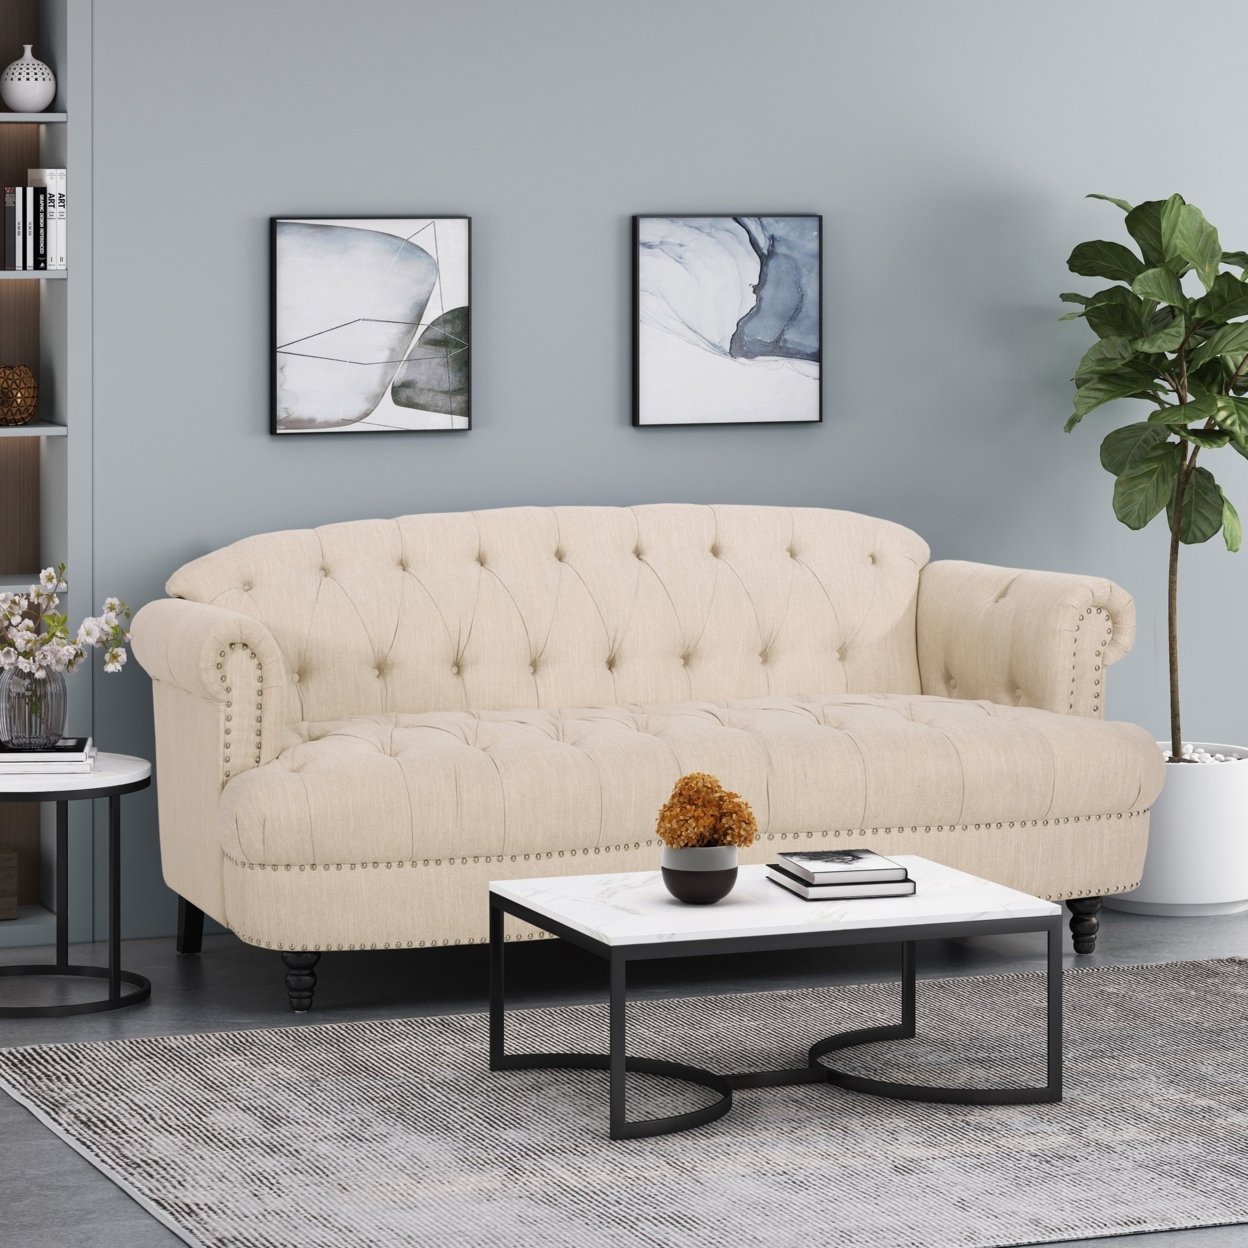 Elspeth Contemporary Deep Tufted Sofa With Nailhead Trim - Dark Brown/beige